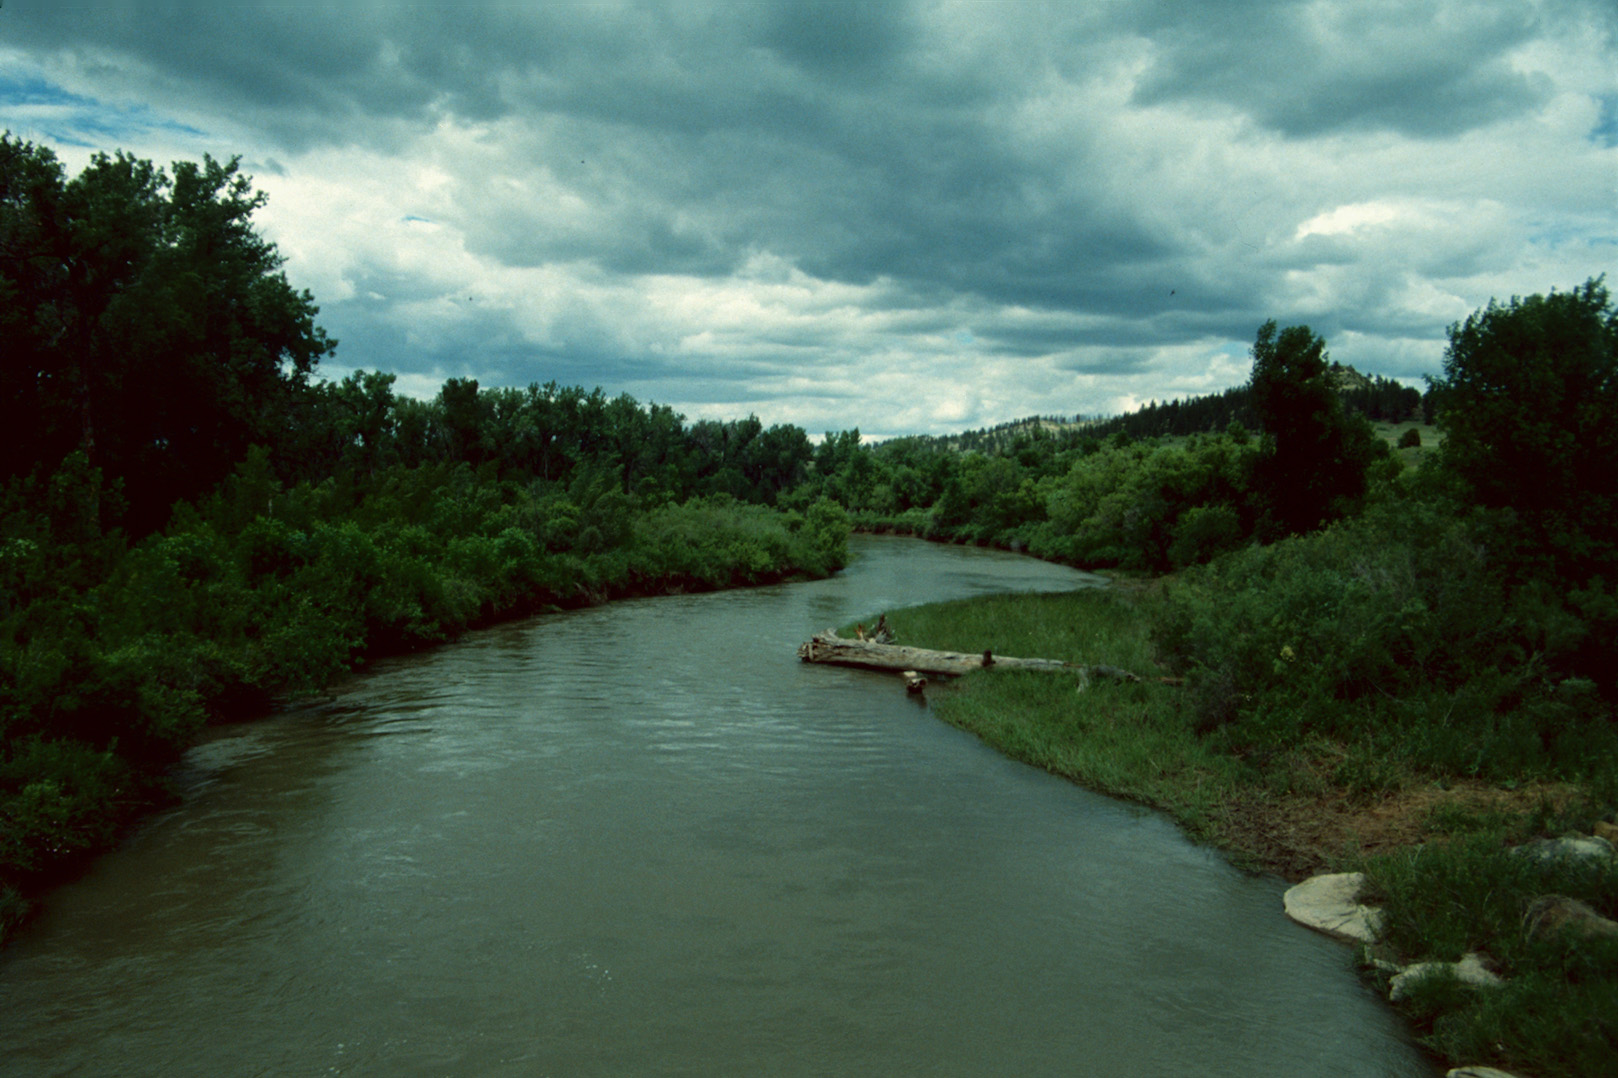 Little Bighorn River, MT - 1993